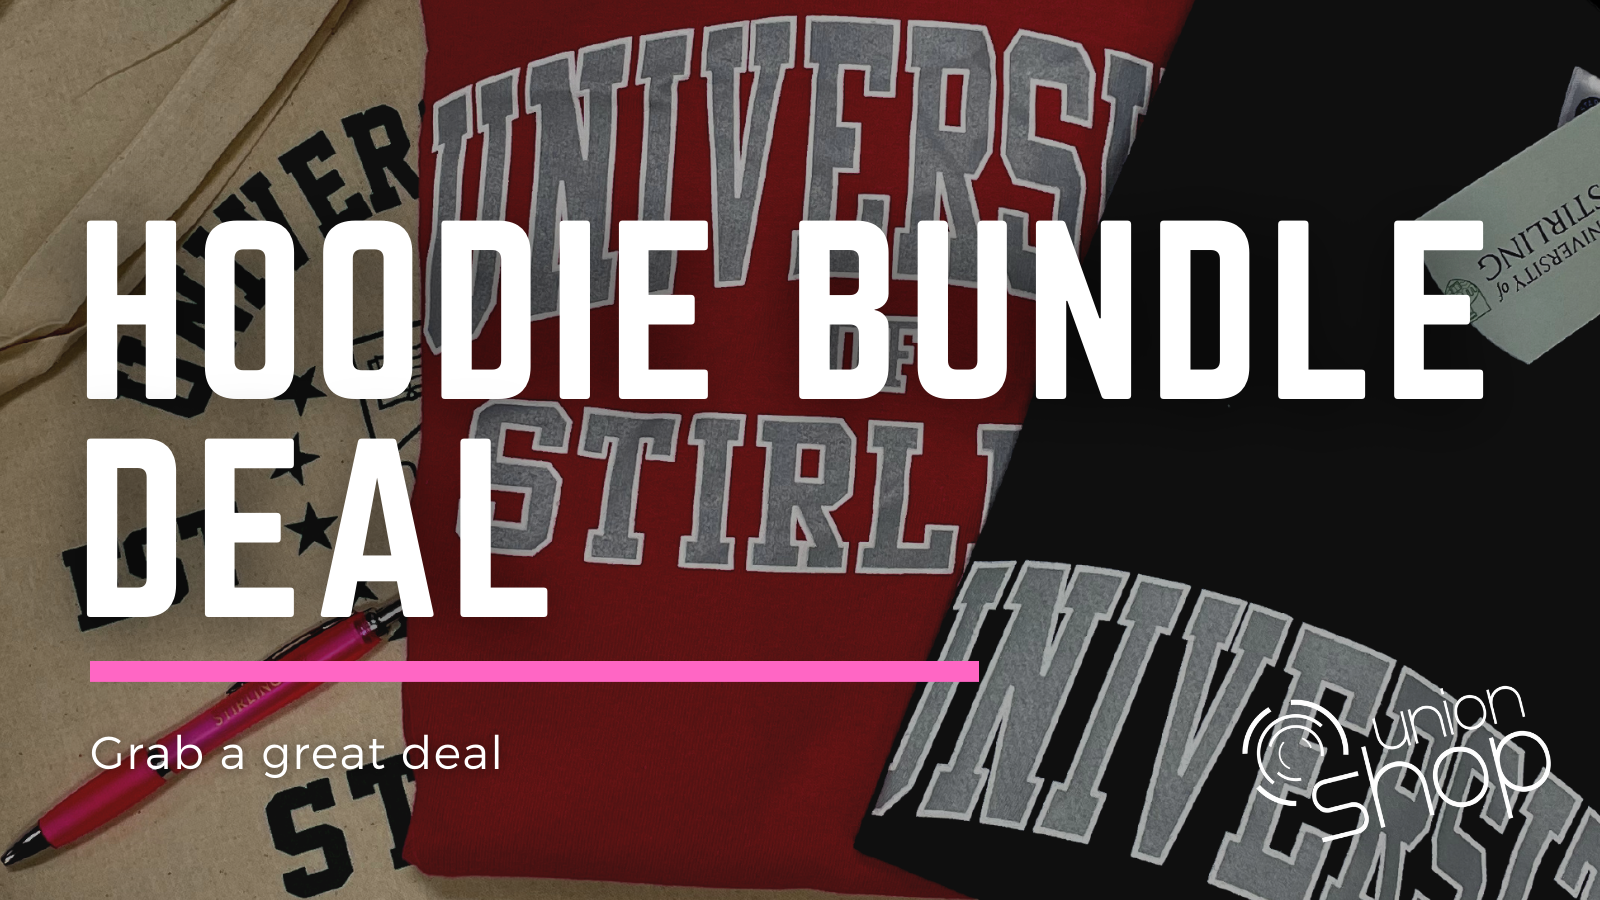 Hoodie Bundle Deal Catalogue Image